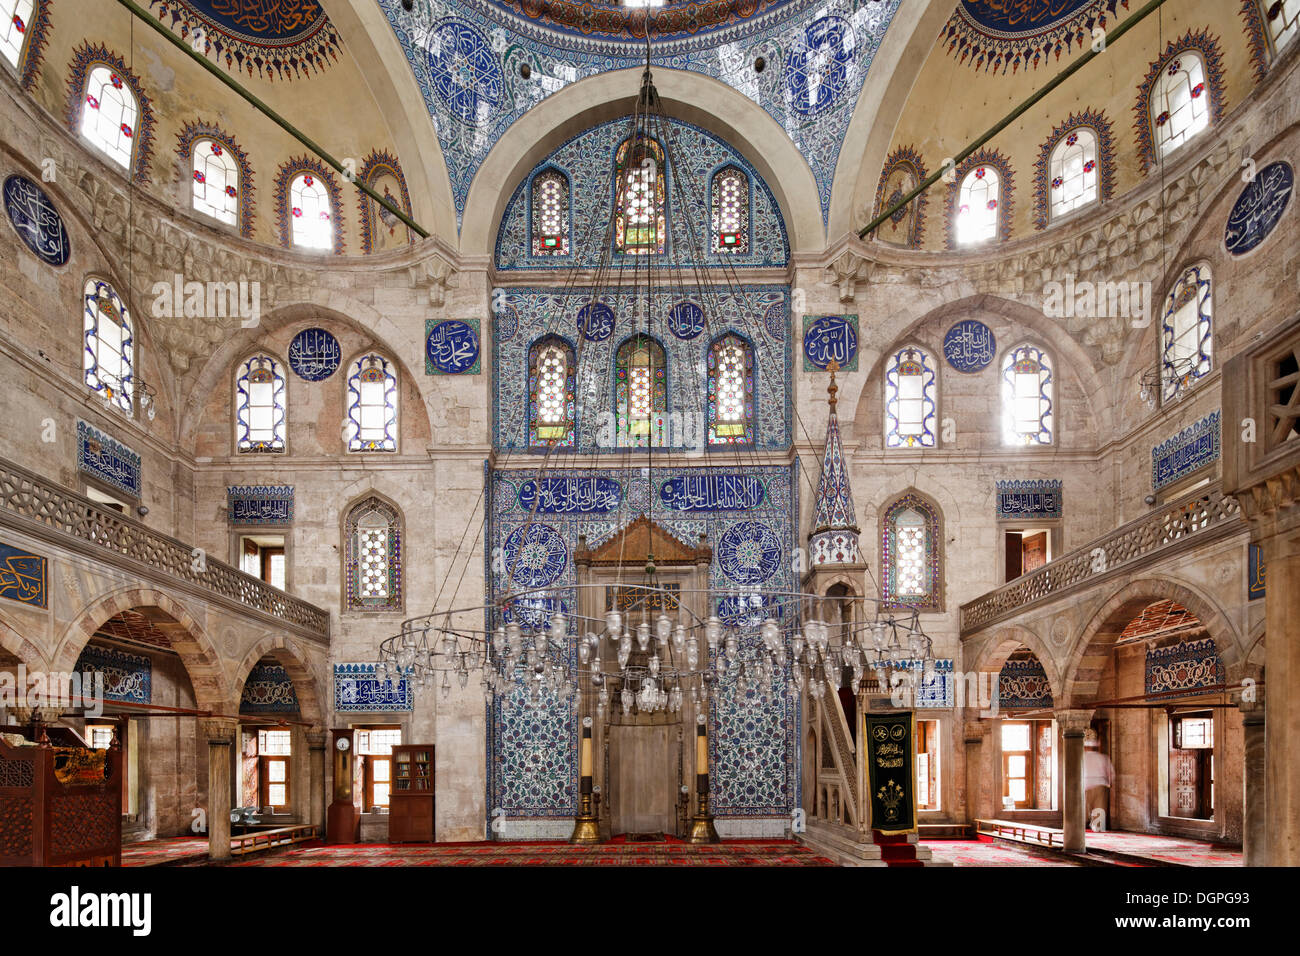 Sokollu Mehmet Pasha Mosque, Sultanahmet historic district, Istanbul, Turkey, Europe Stock Photo